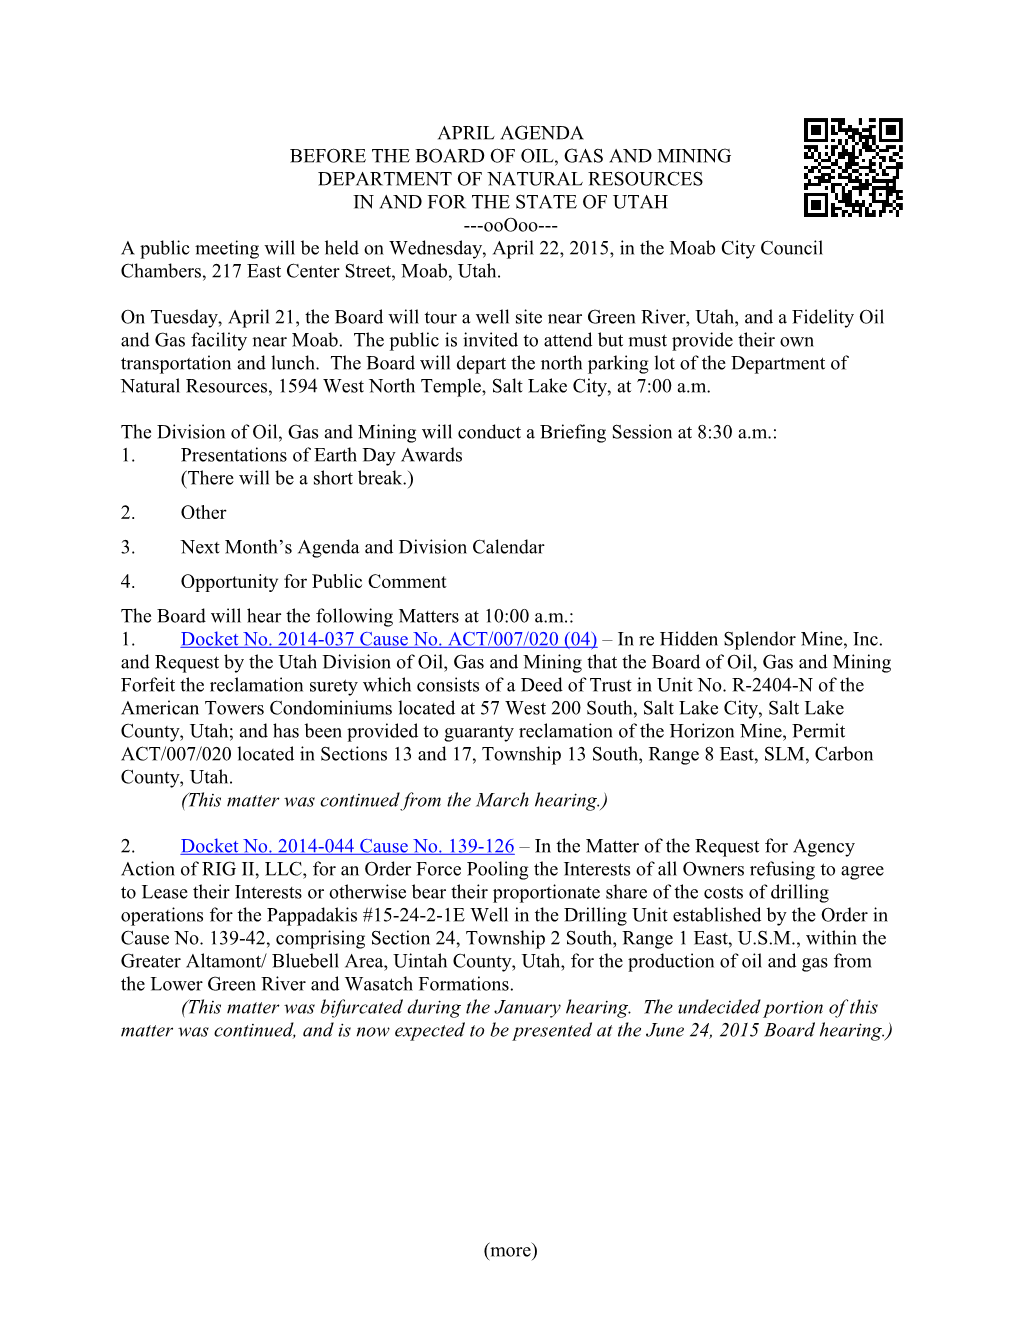 Board Agenda for February 25, 2013